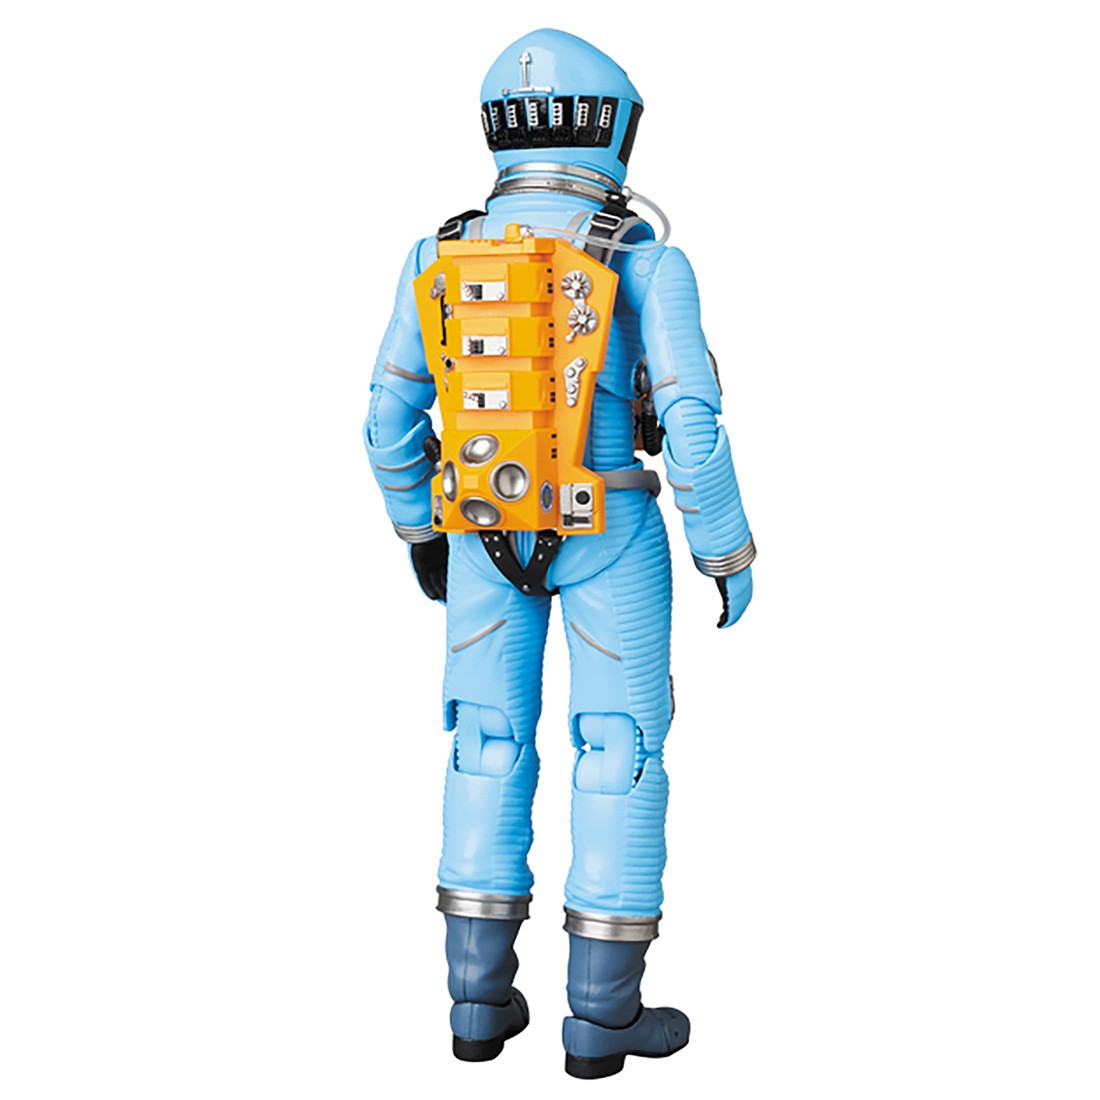 Medicom MAFEX 2001 A Space Odyssey Space Suit Light Blue Ver